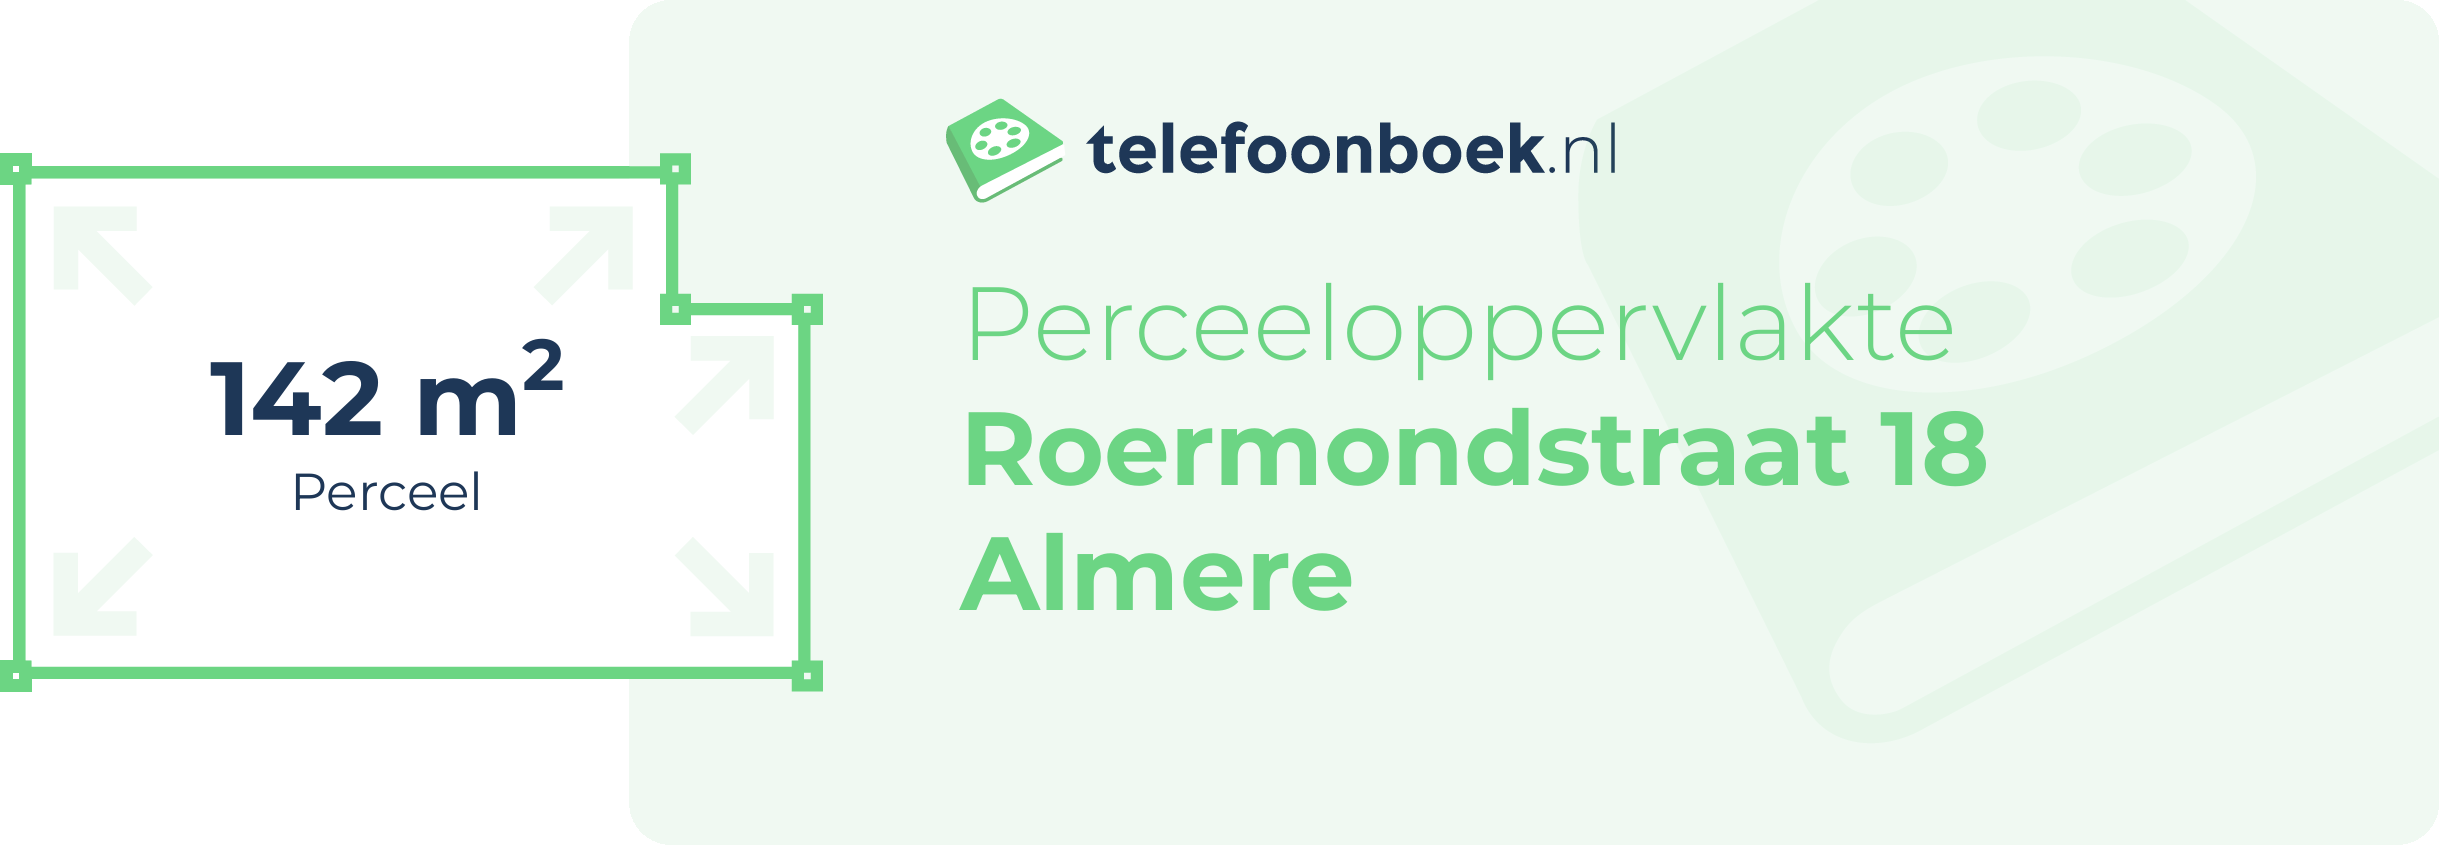 Perceeloppervlakte Roermondstraat 18 Almere